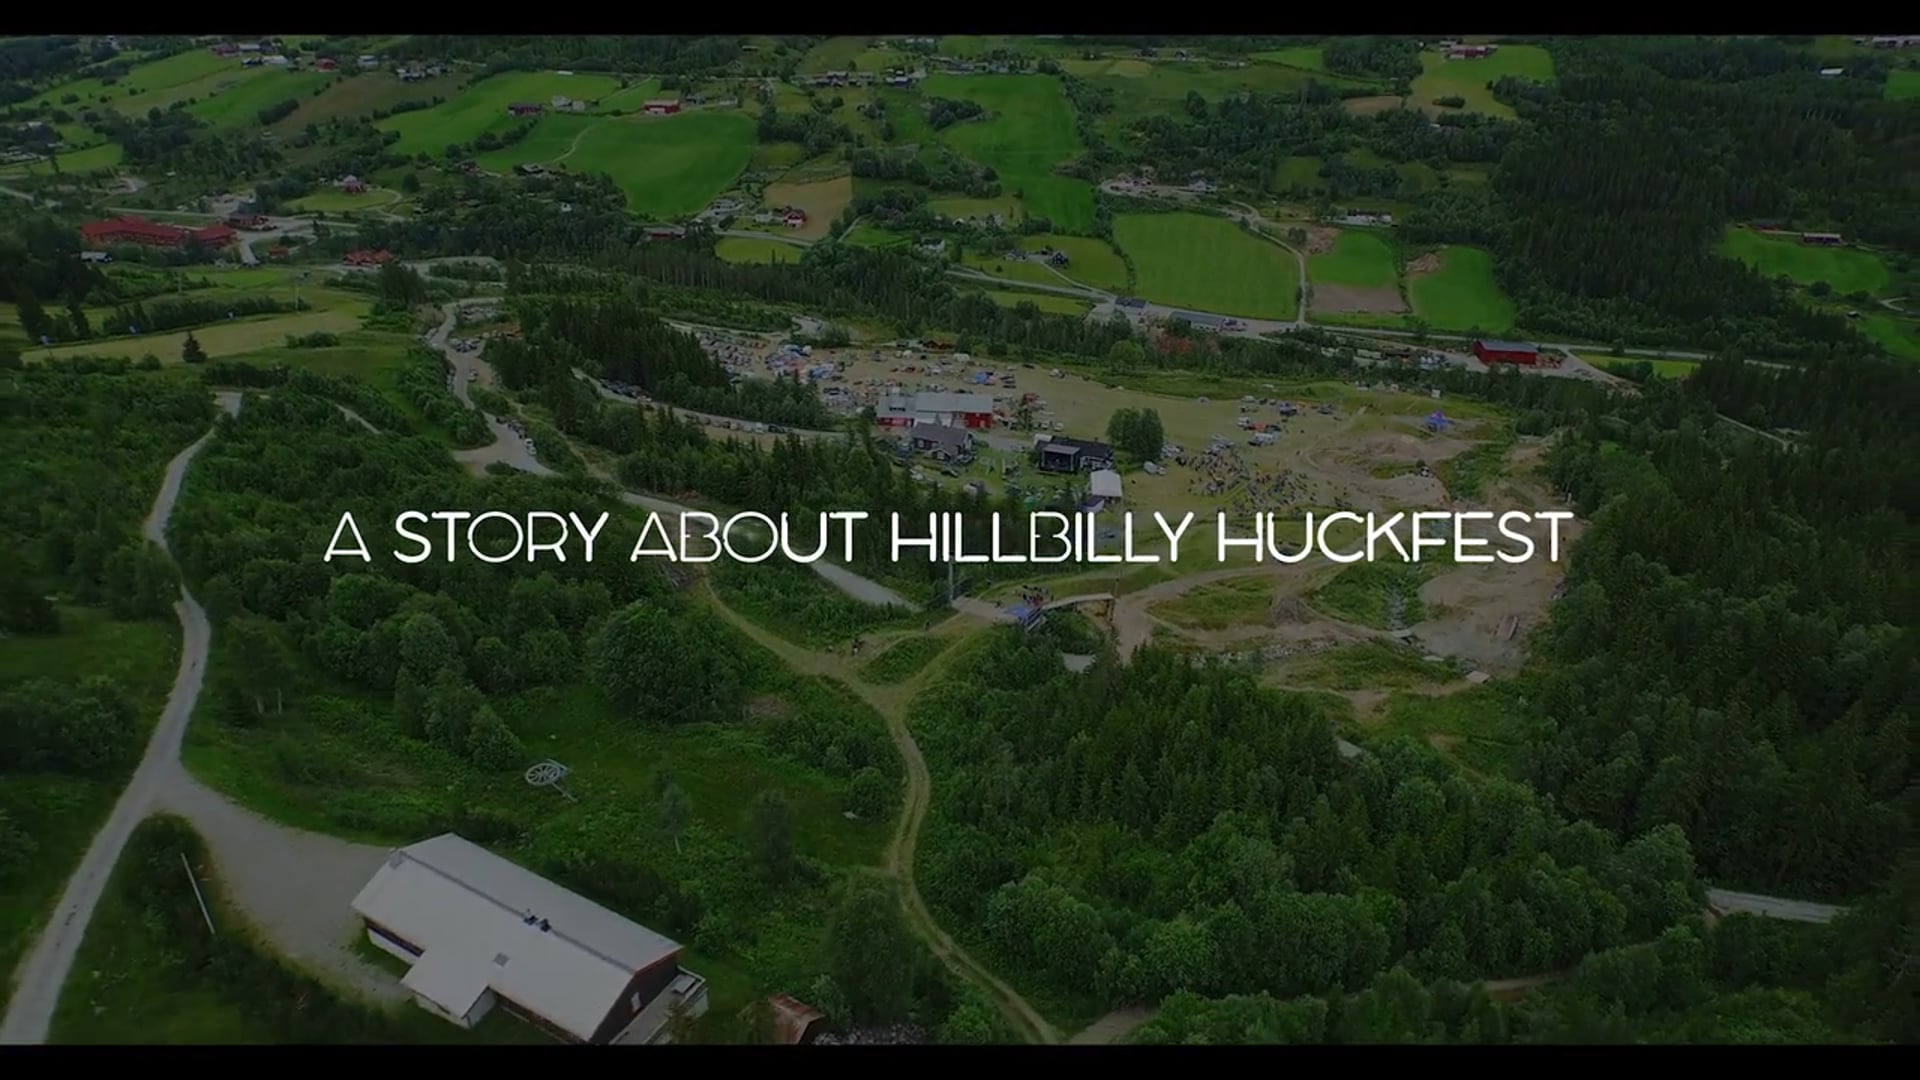 "Huck 'Em Aal" - A story about Hillbilly Huckfest